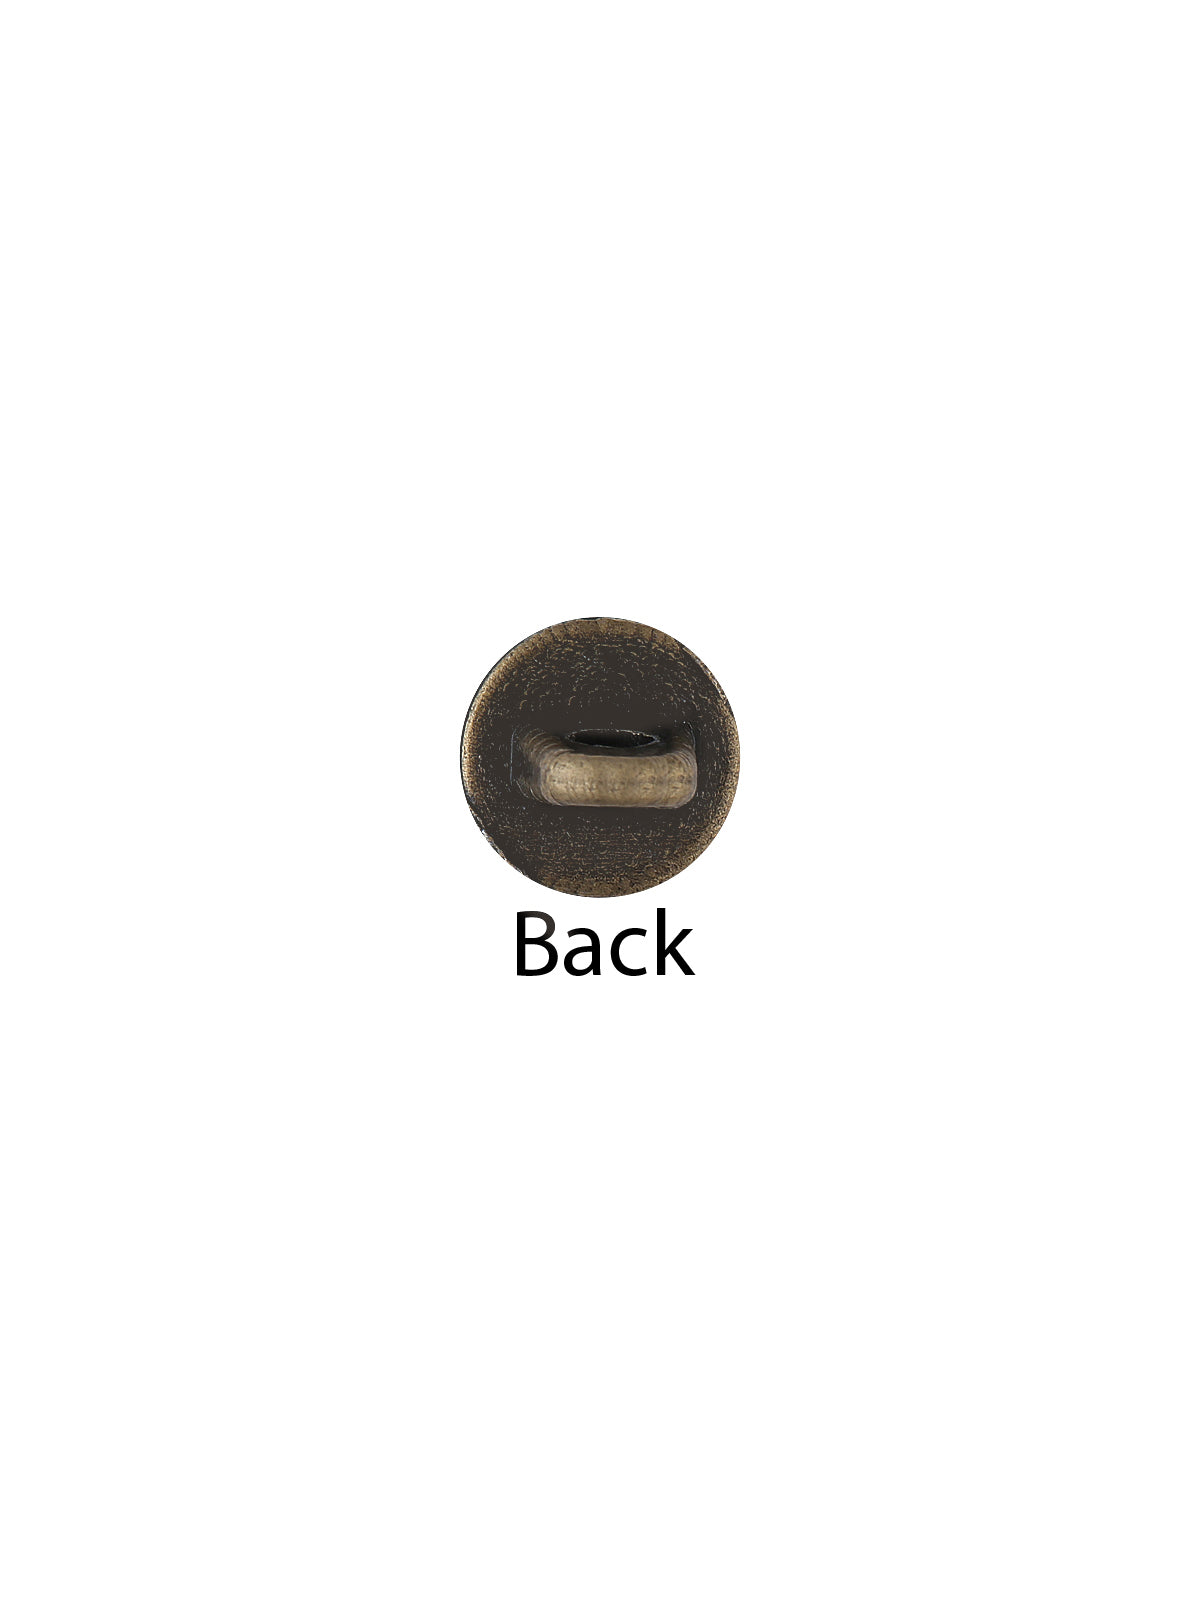 Engraved Round Shape 8mm (12L) antique brass Shirt/kurta downhole metal Button